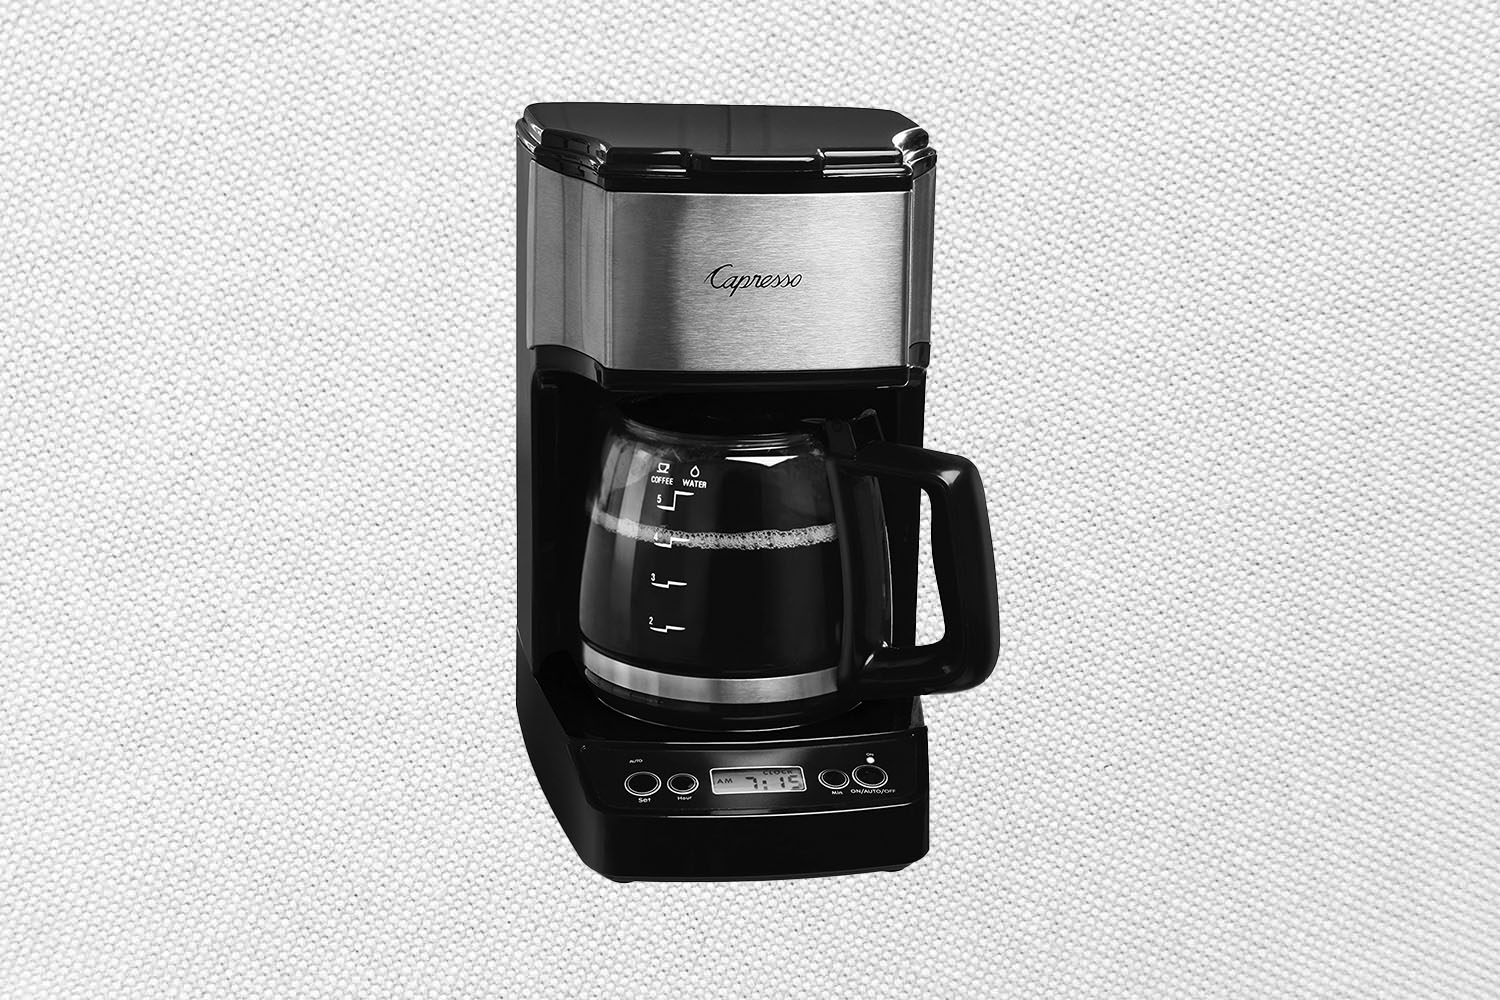 https://www.insidehook.com/wp-content/uploads/2022/09/Capresso-5-Cup-Mini-Drip-Coffee-Maker.jpg?w=1500&resize=1500%2C1000